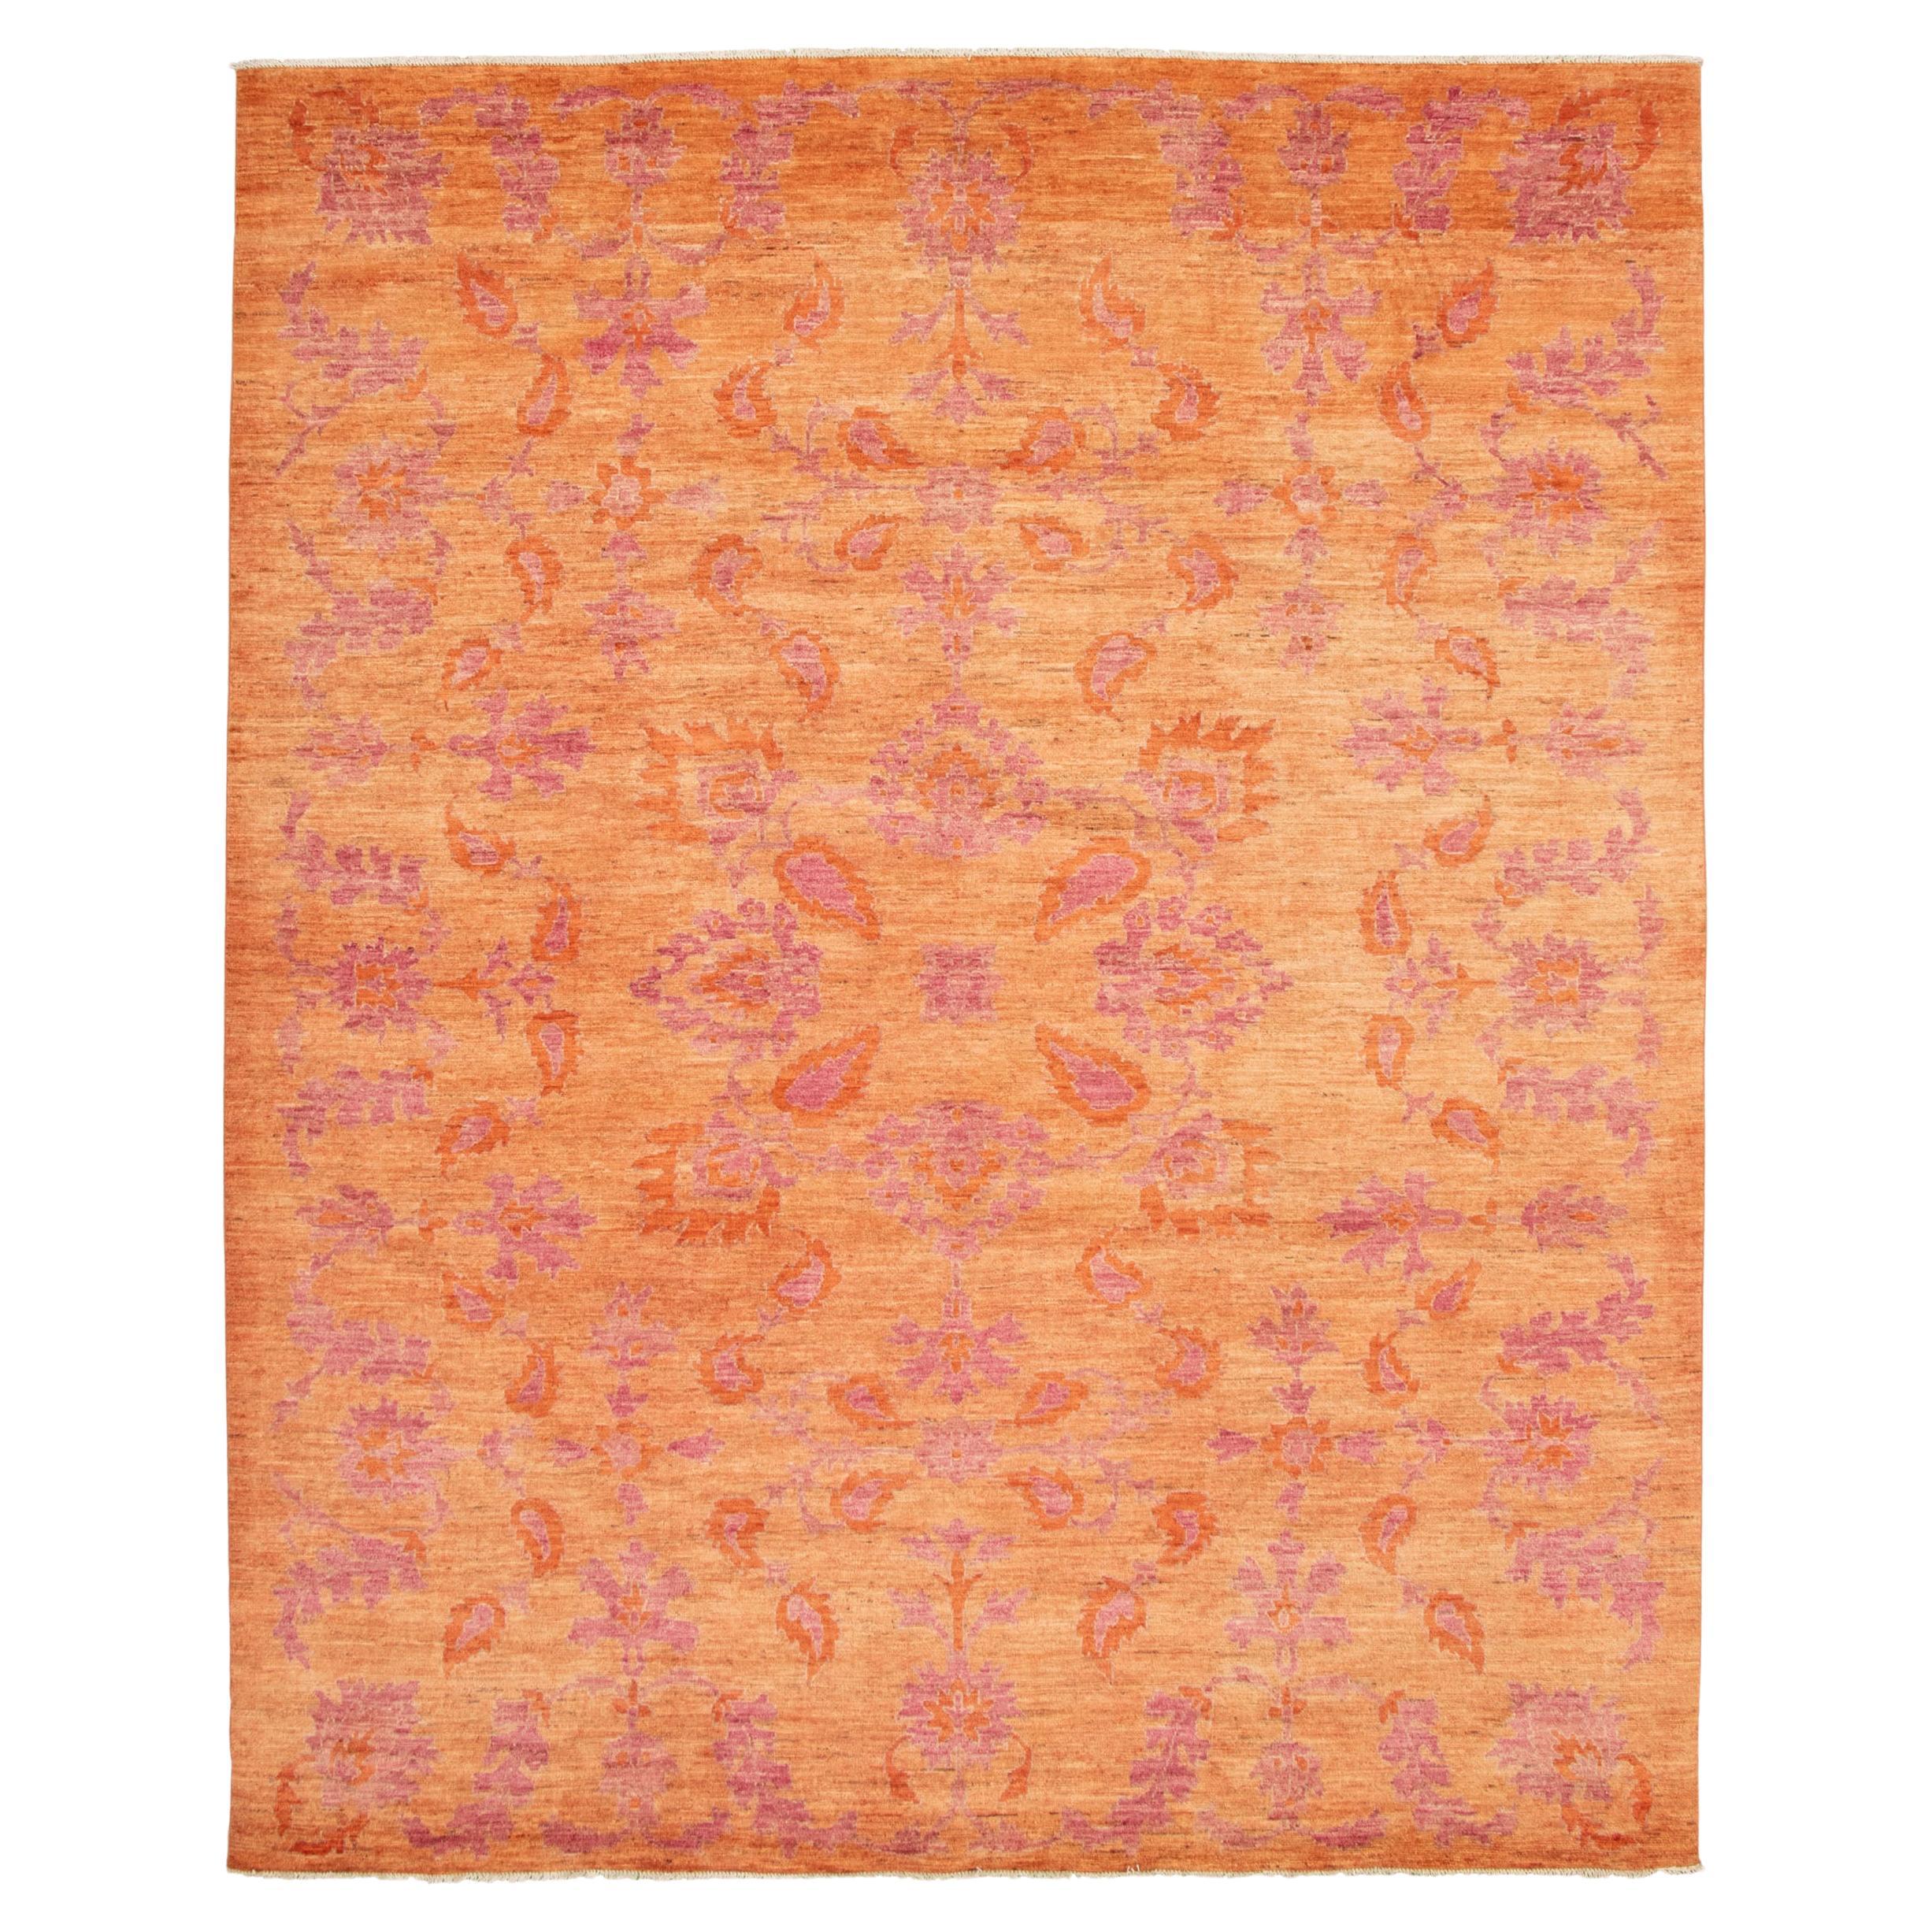 Fine Persian Oushak Rug, Pink and Orange, Transitional Floral Design, 9' x 12' For Sale